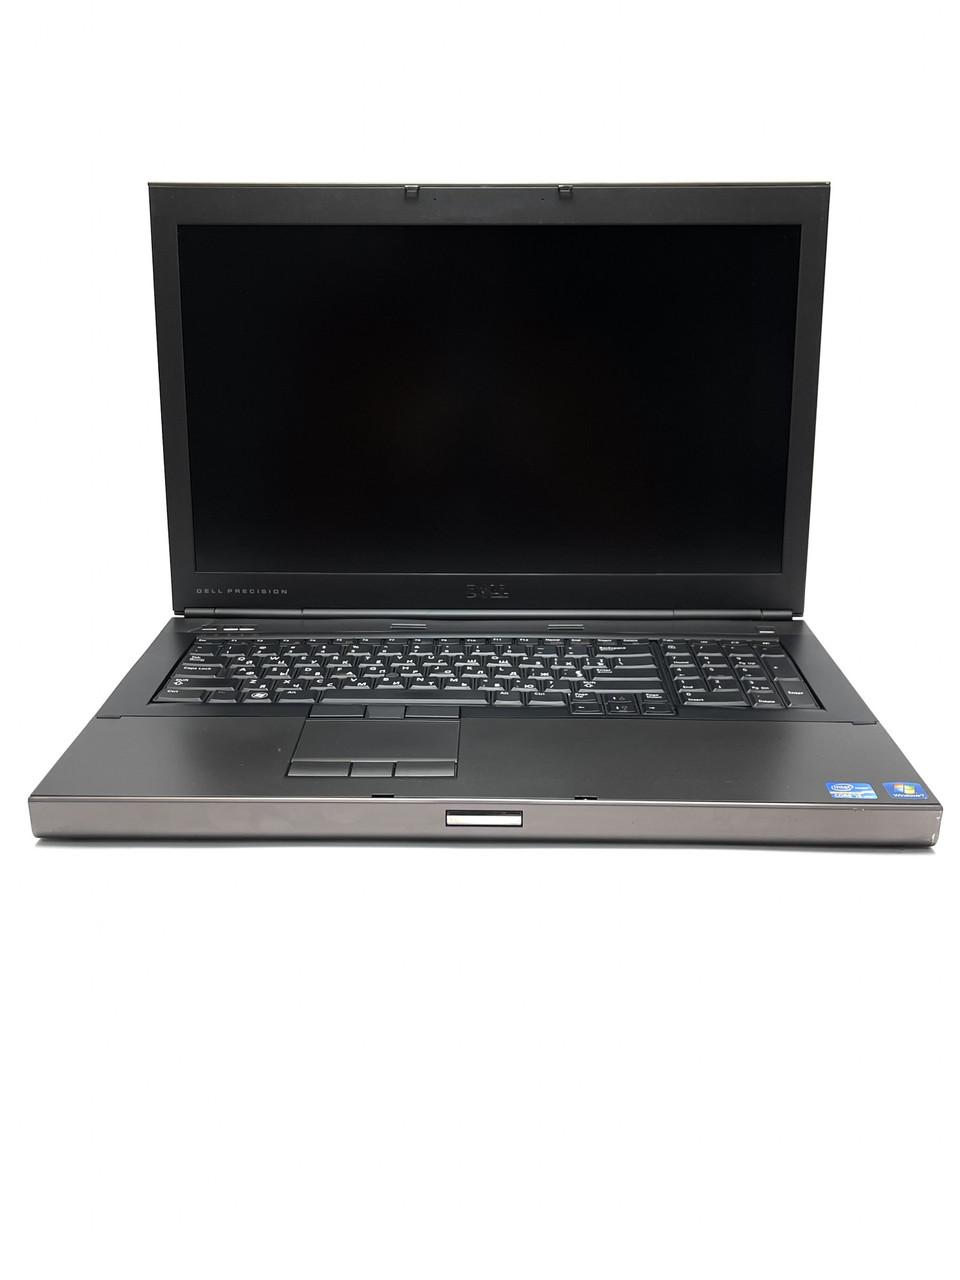 Ноутбук Dell Precision M6600 17 Intel Core i5 8 Гб 120 Гб Refurbished